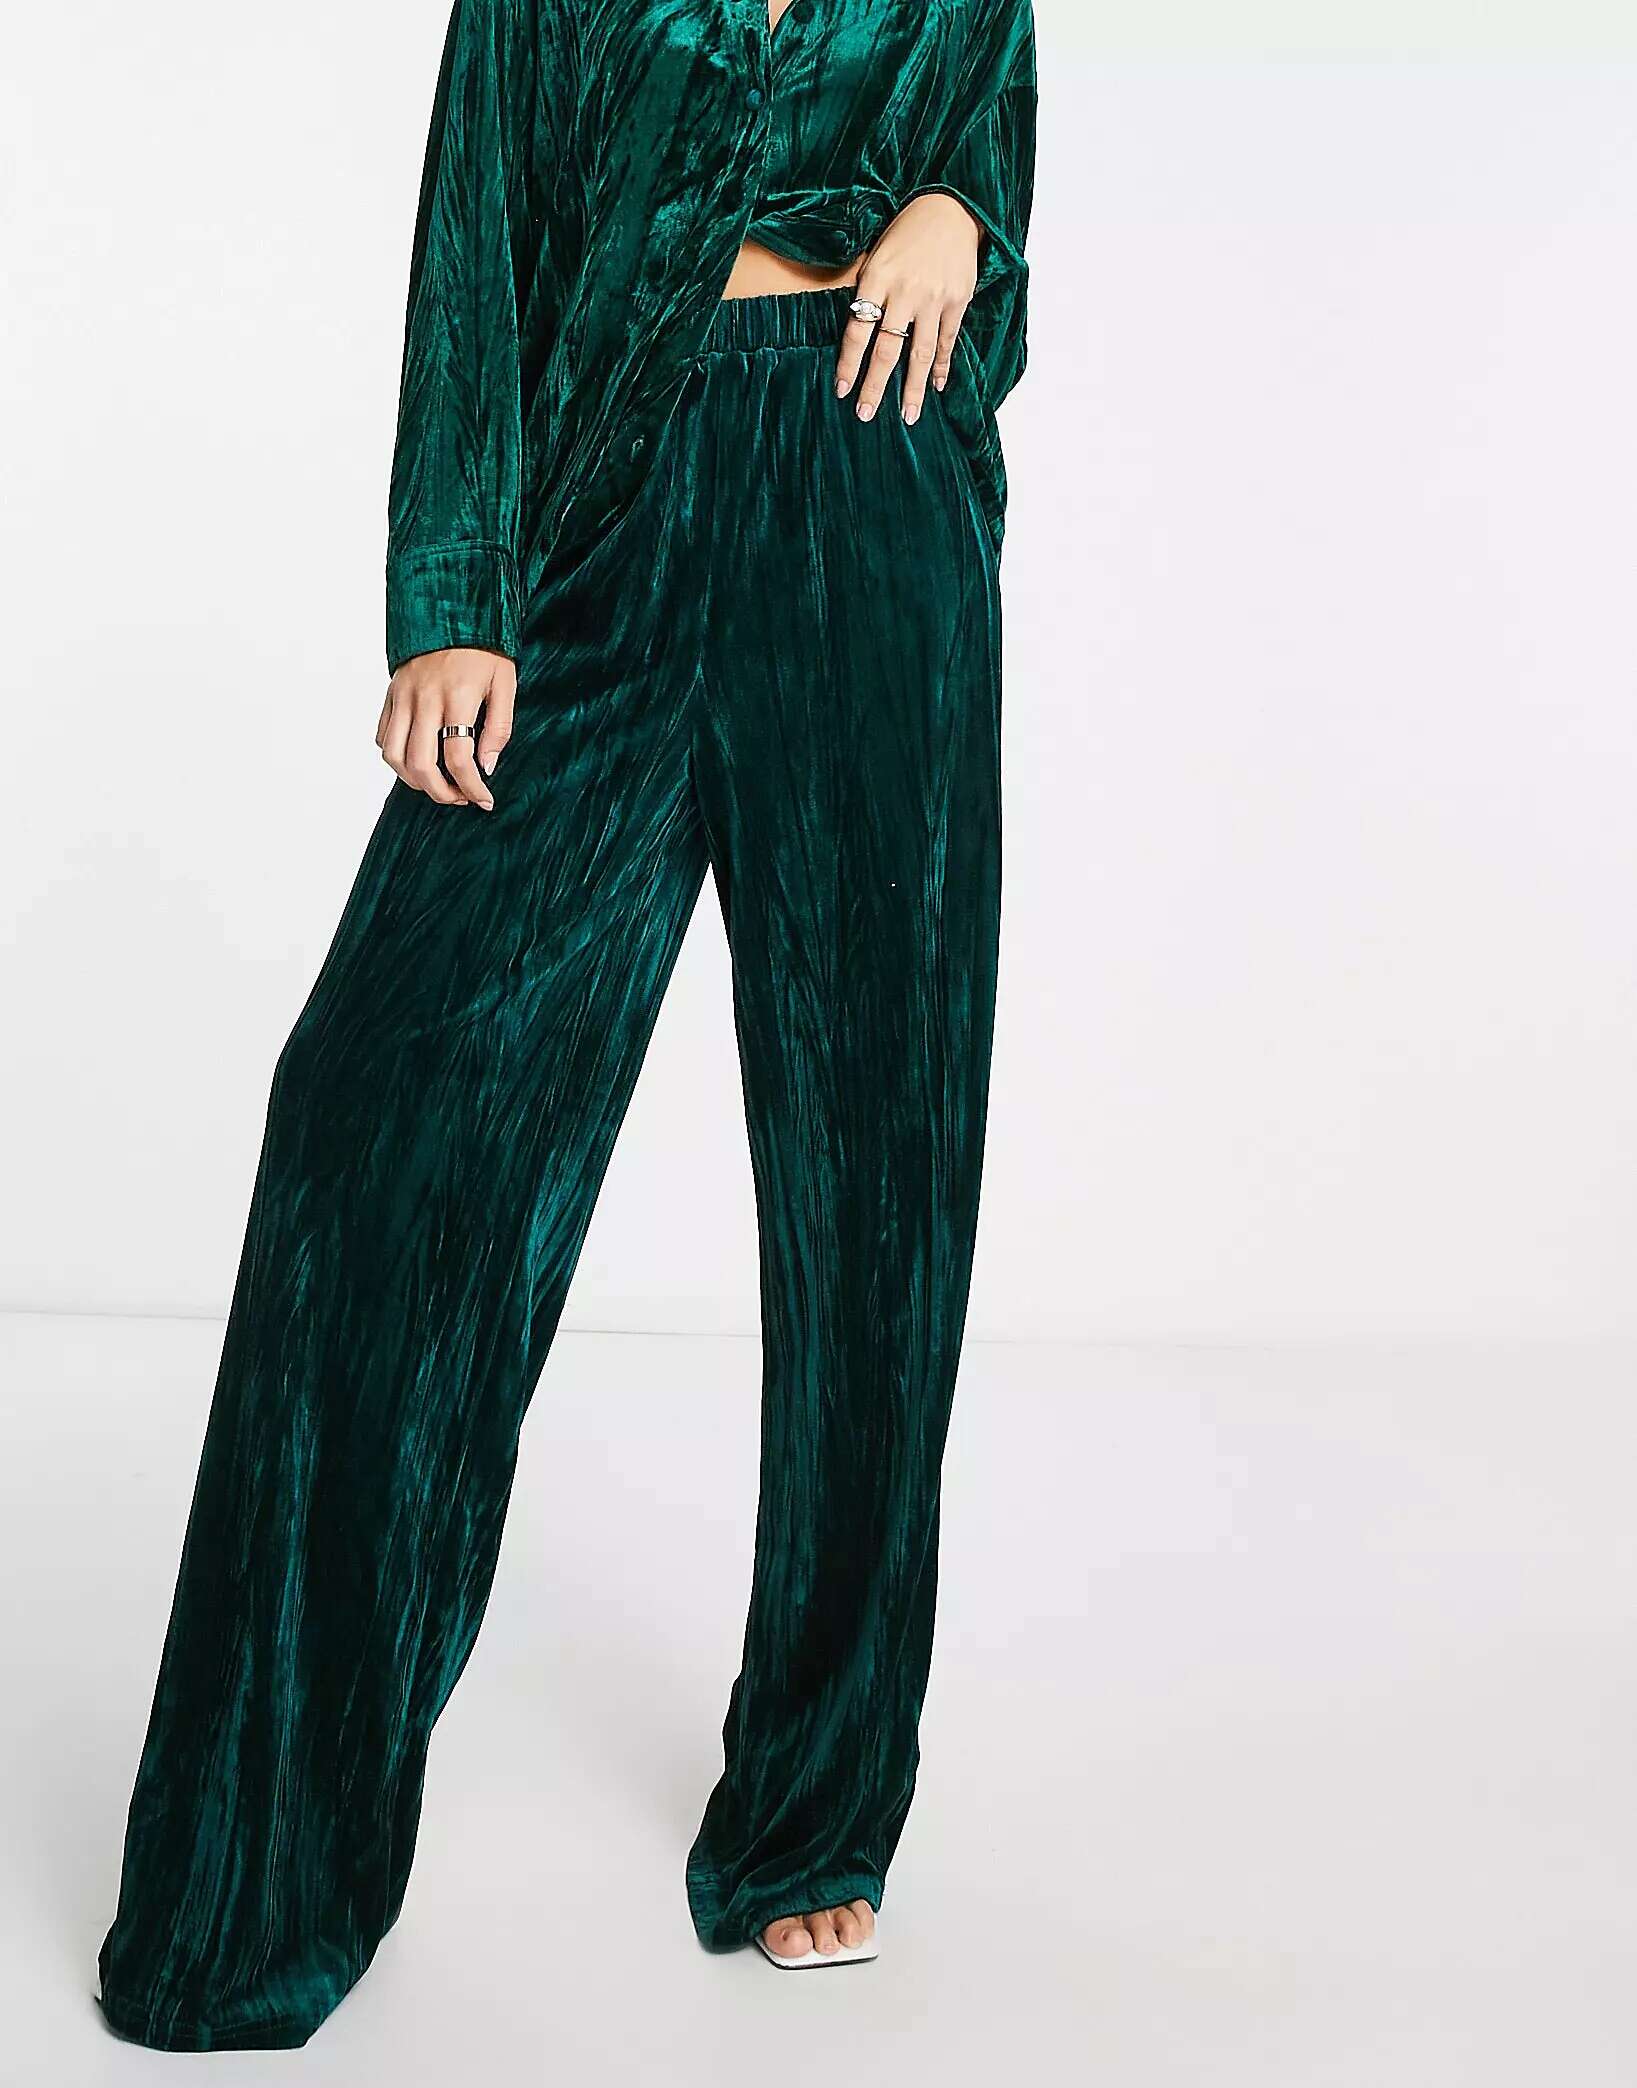 Суперширокие эластичные брюки Extro & Vert изумрудно-зеленого цвета